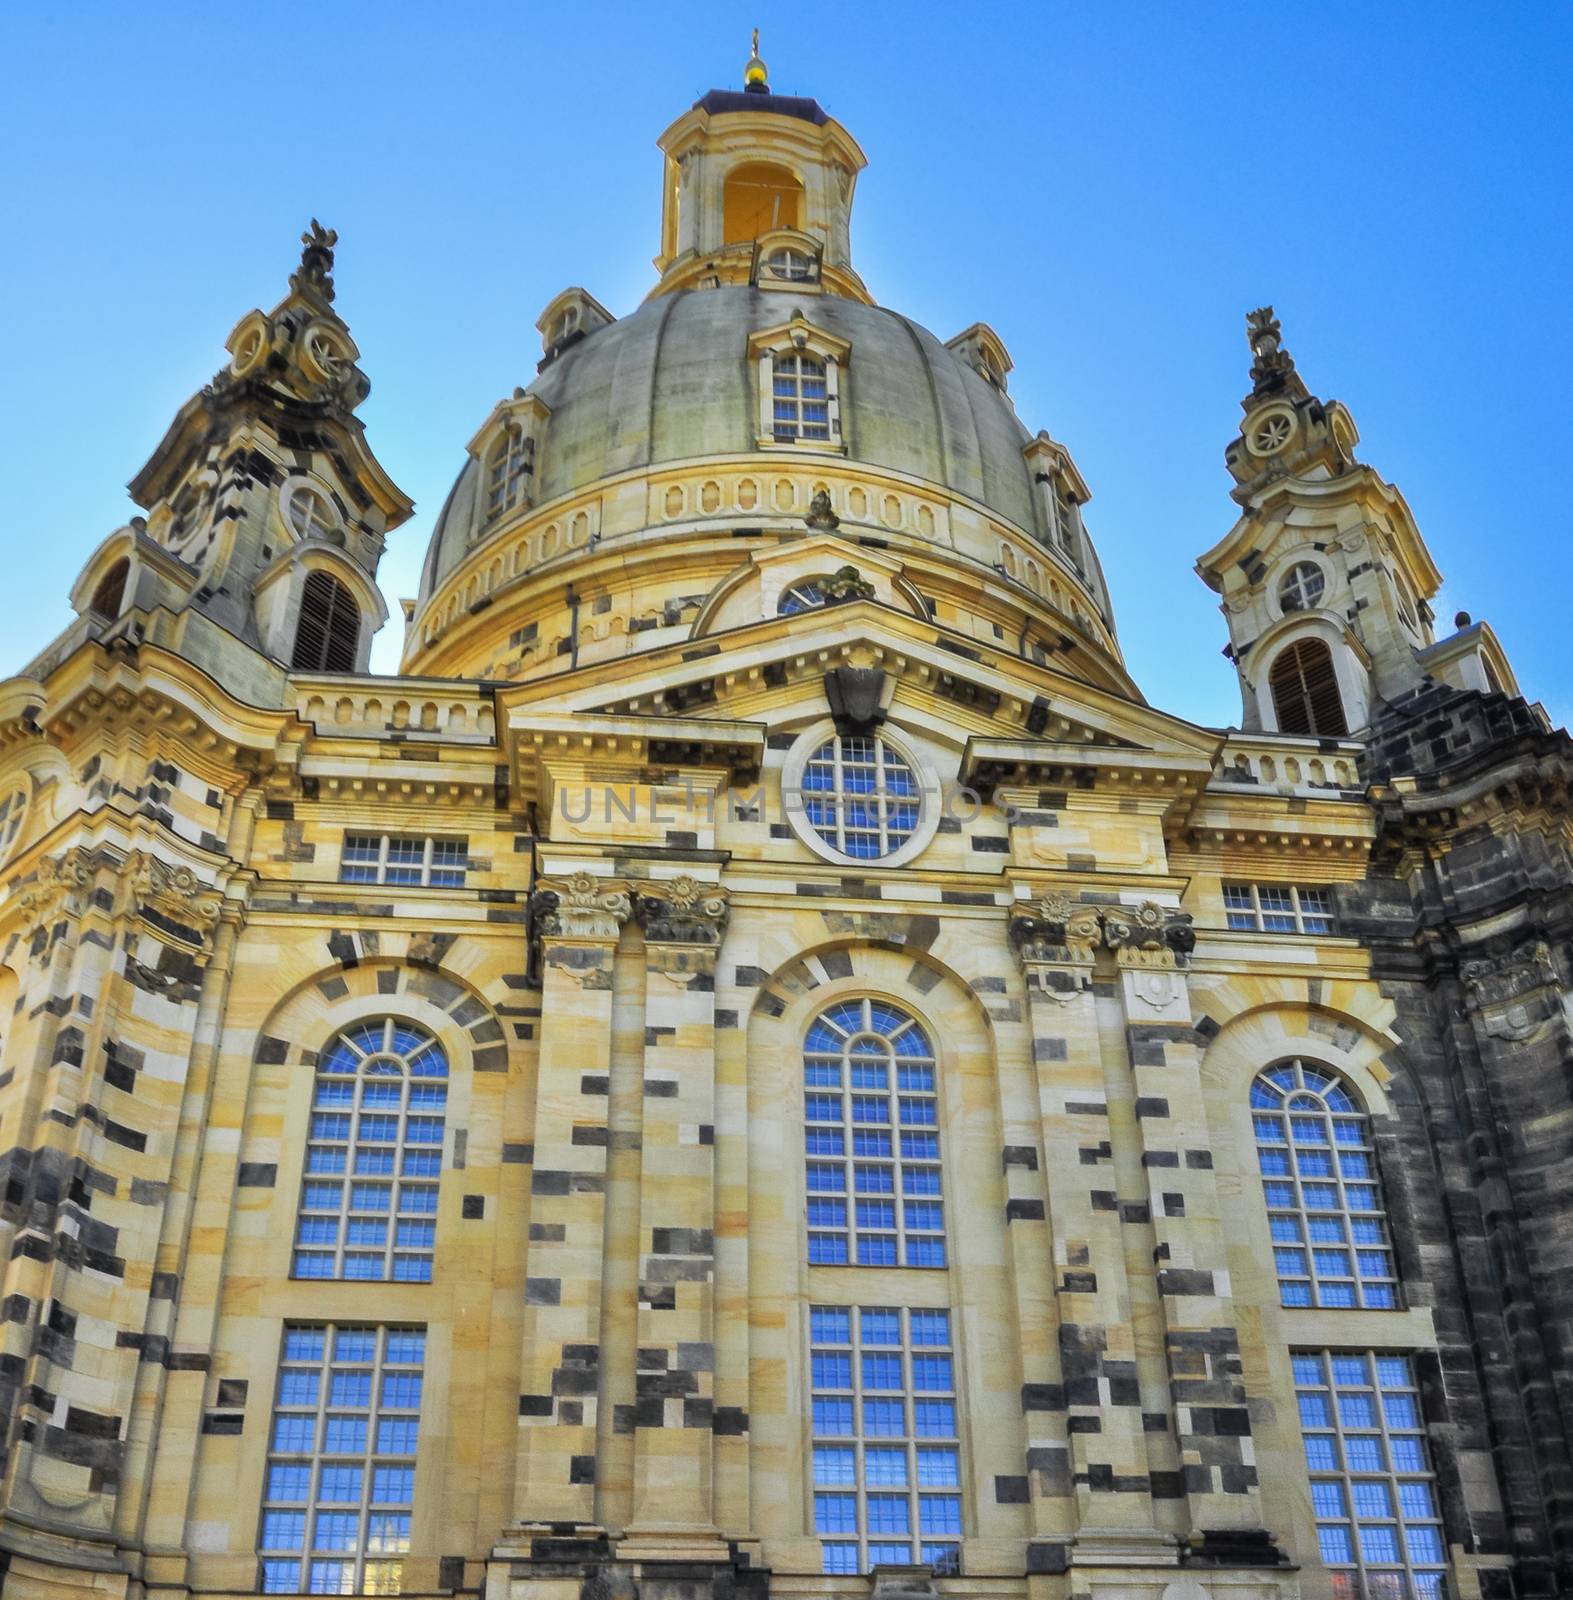 Church Frauenkirche front  in Dresden Germany by weltreisendertj